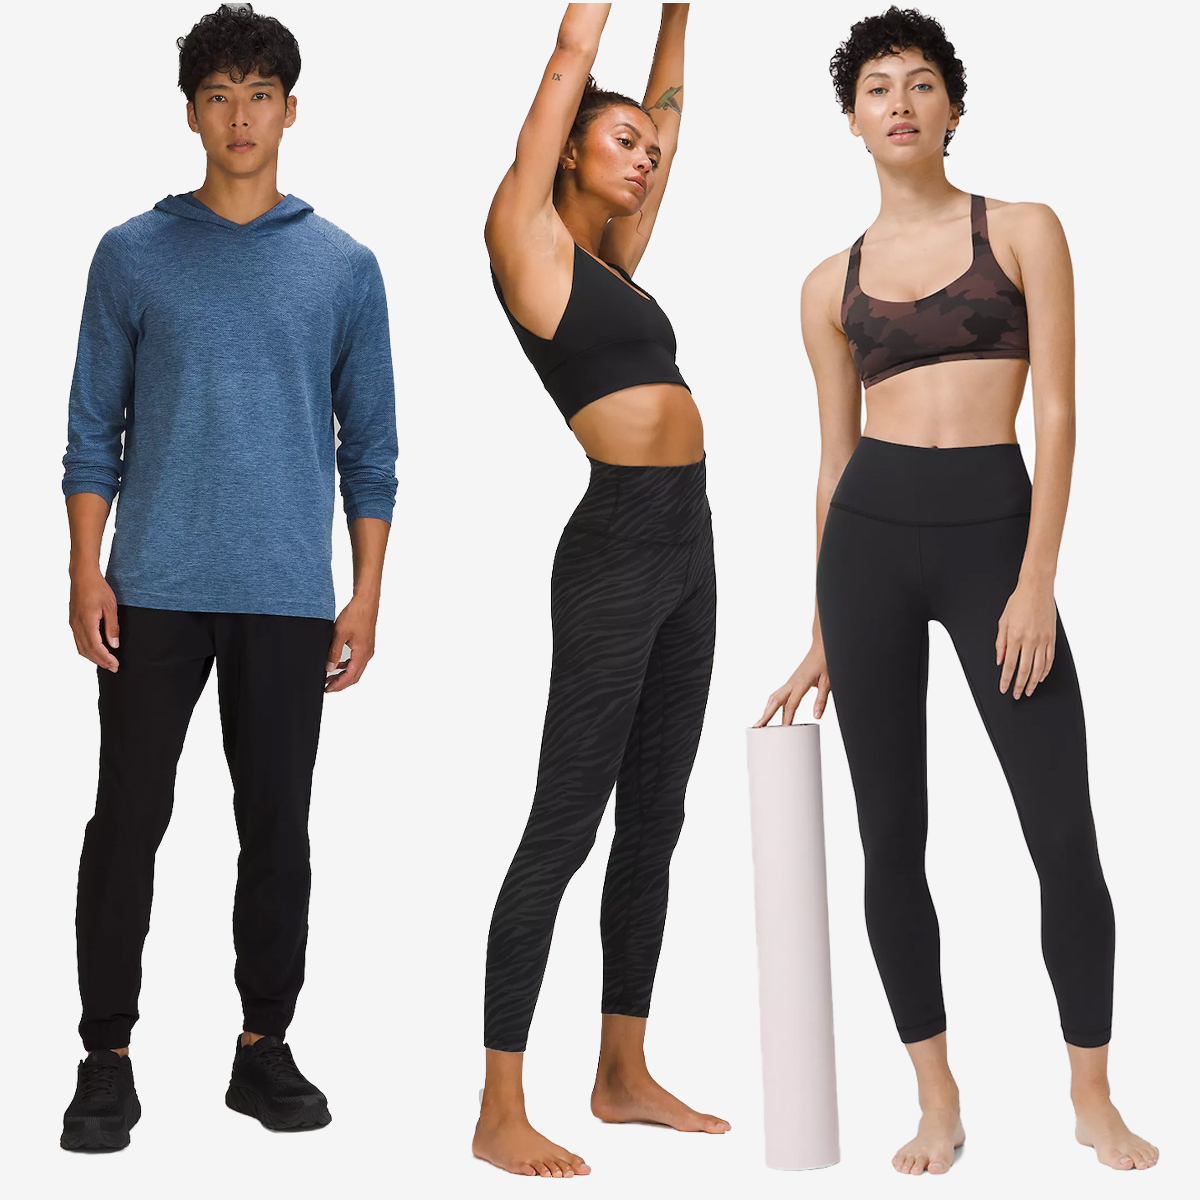 Lululemon Black Friday sale 2021: Best leggings deals